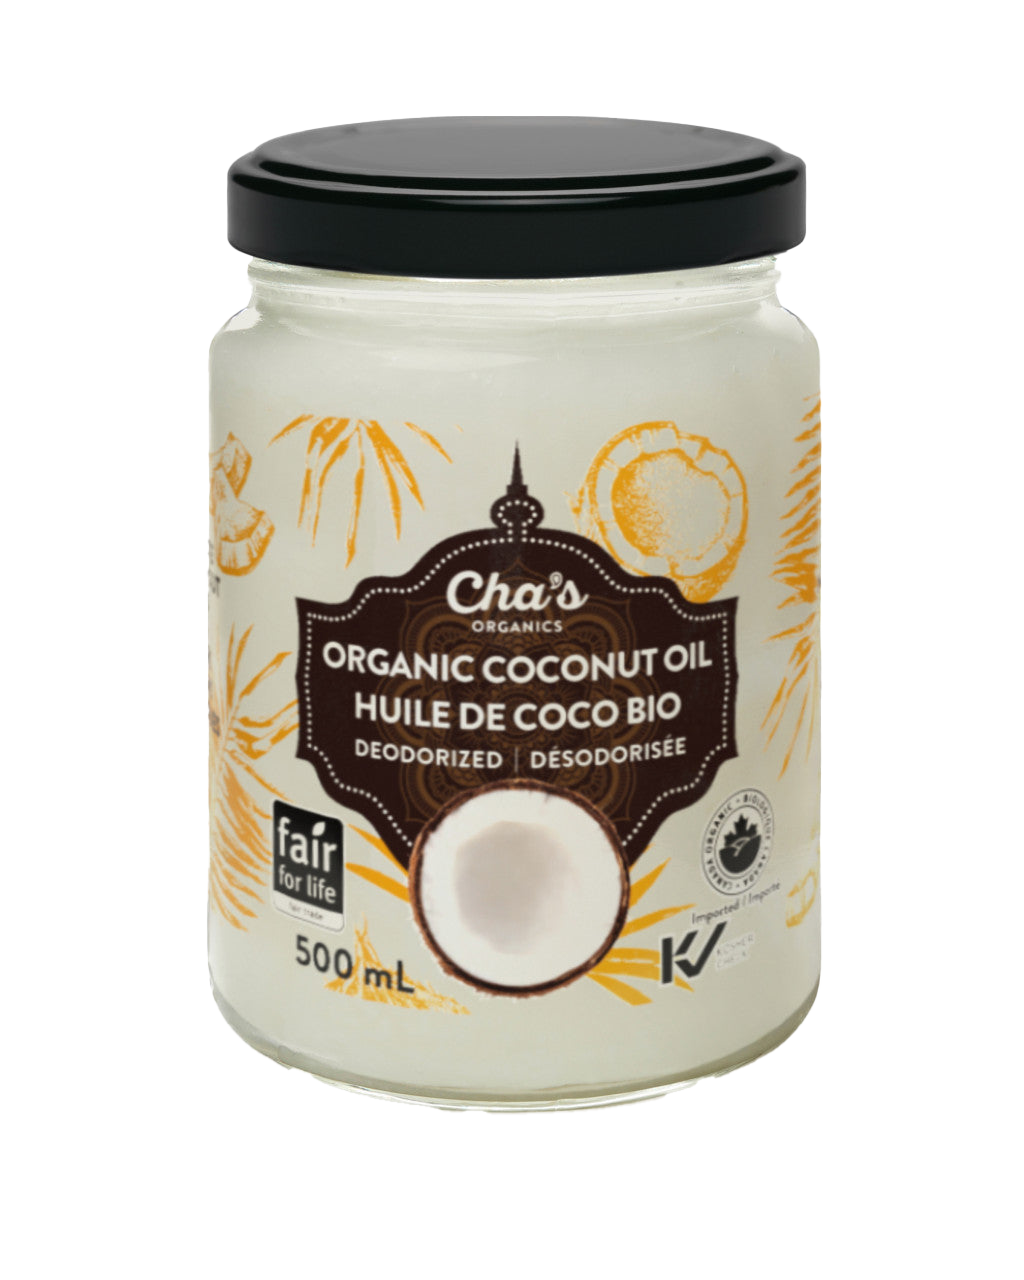 Deodorized Coconut Oil